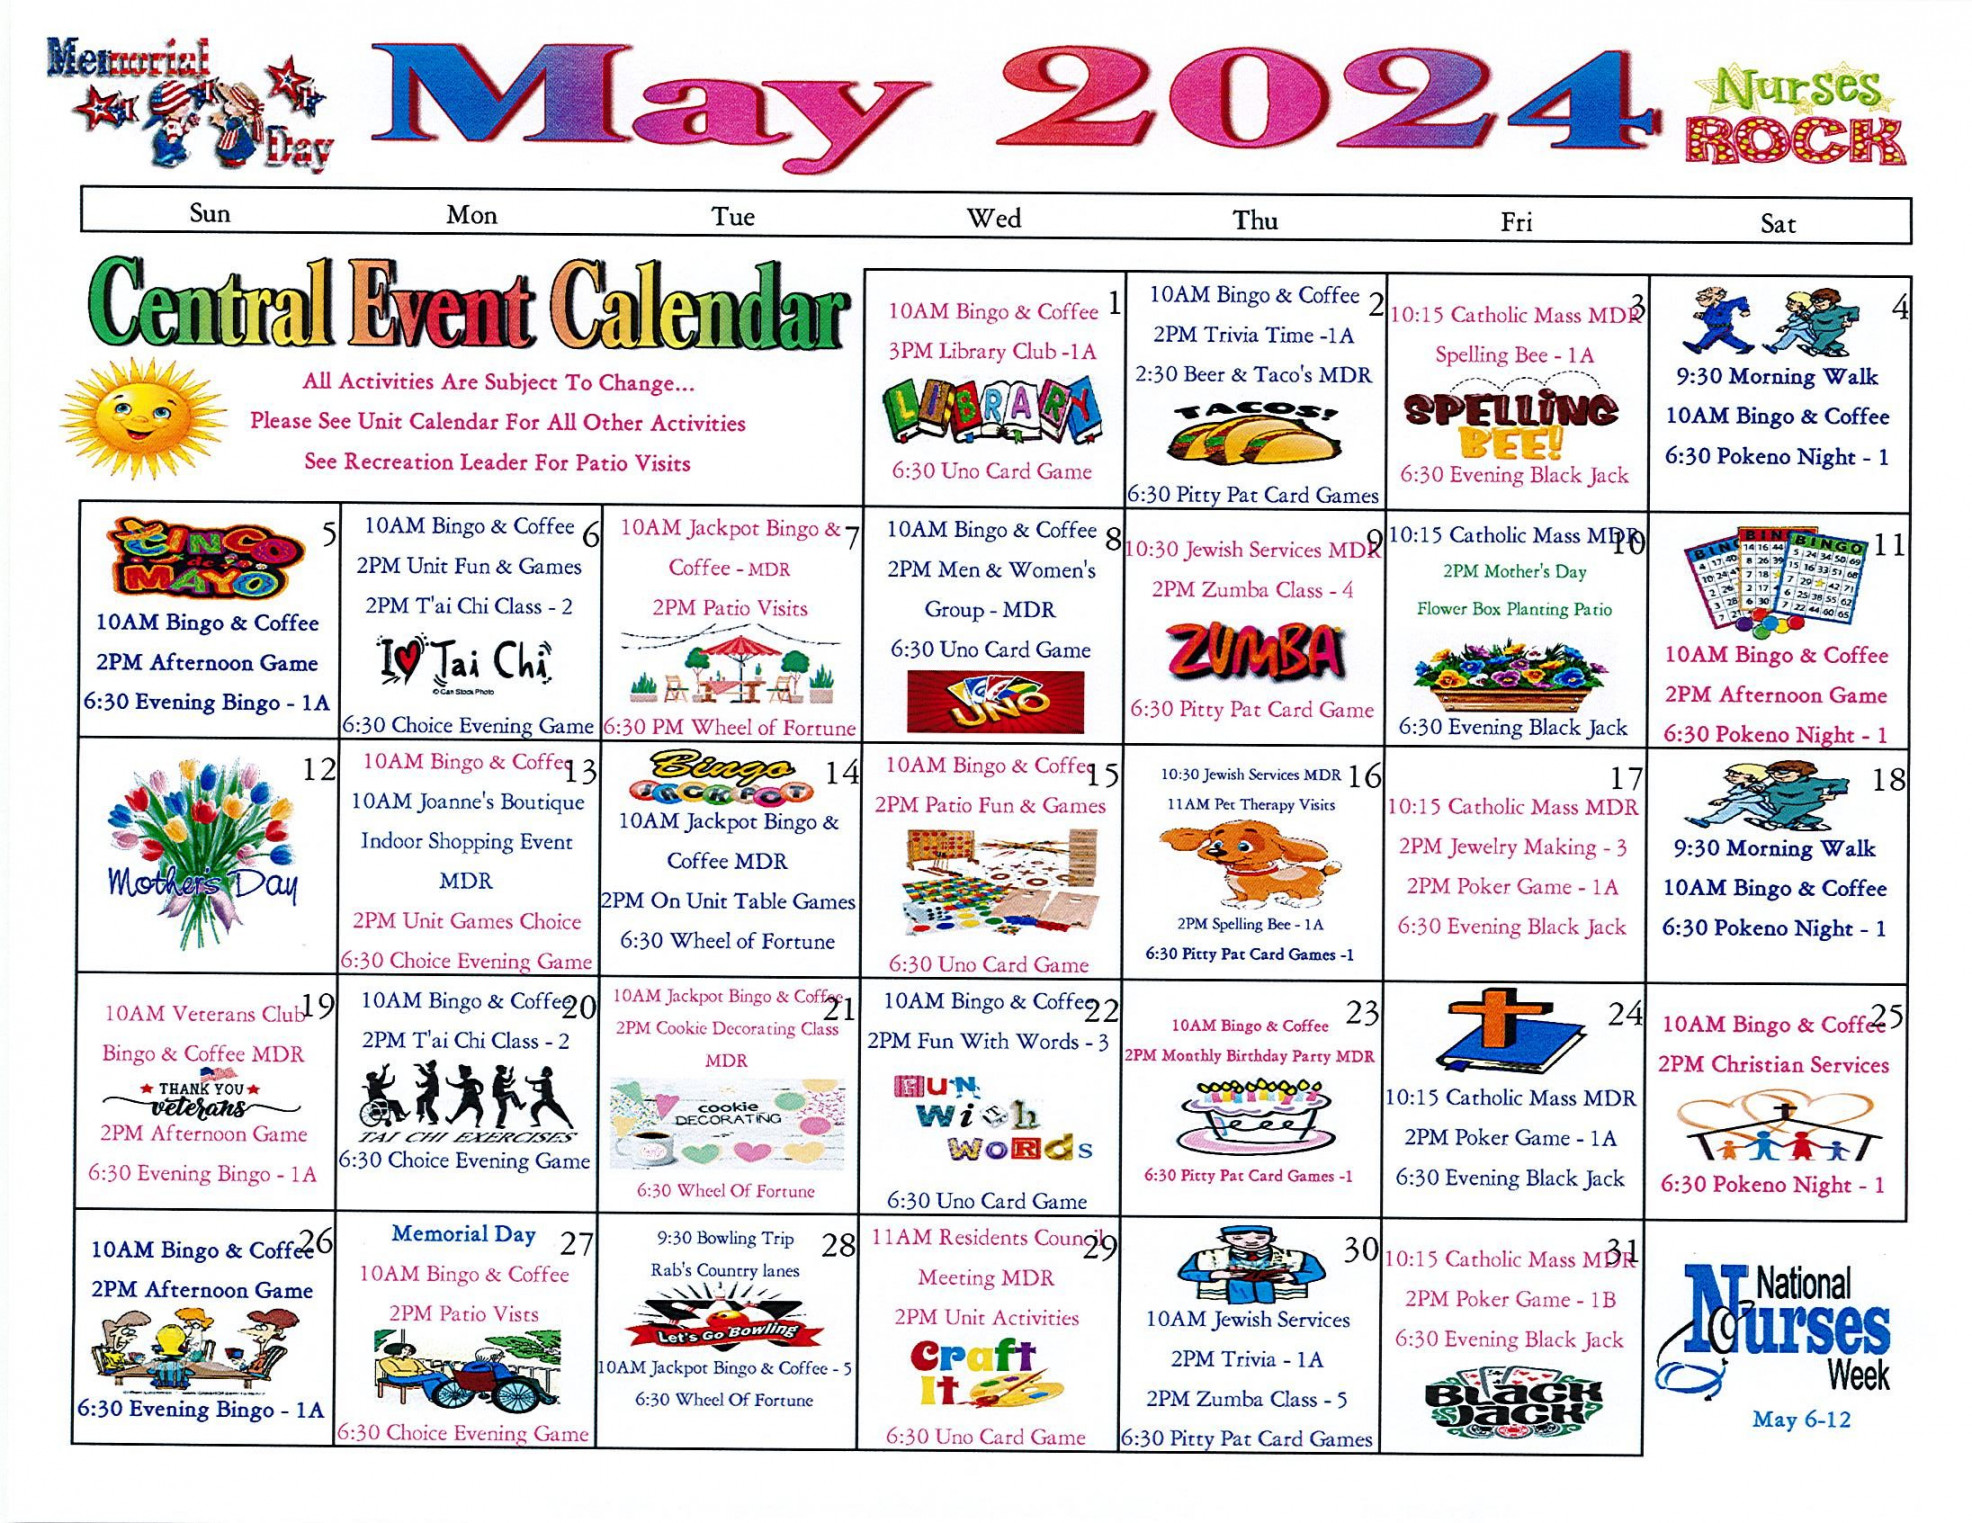 Staten Island Care Center Event Calendar - Staten Island Care Center